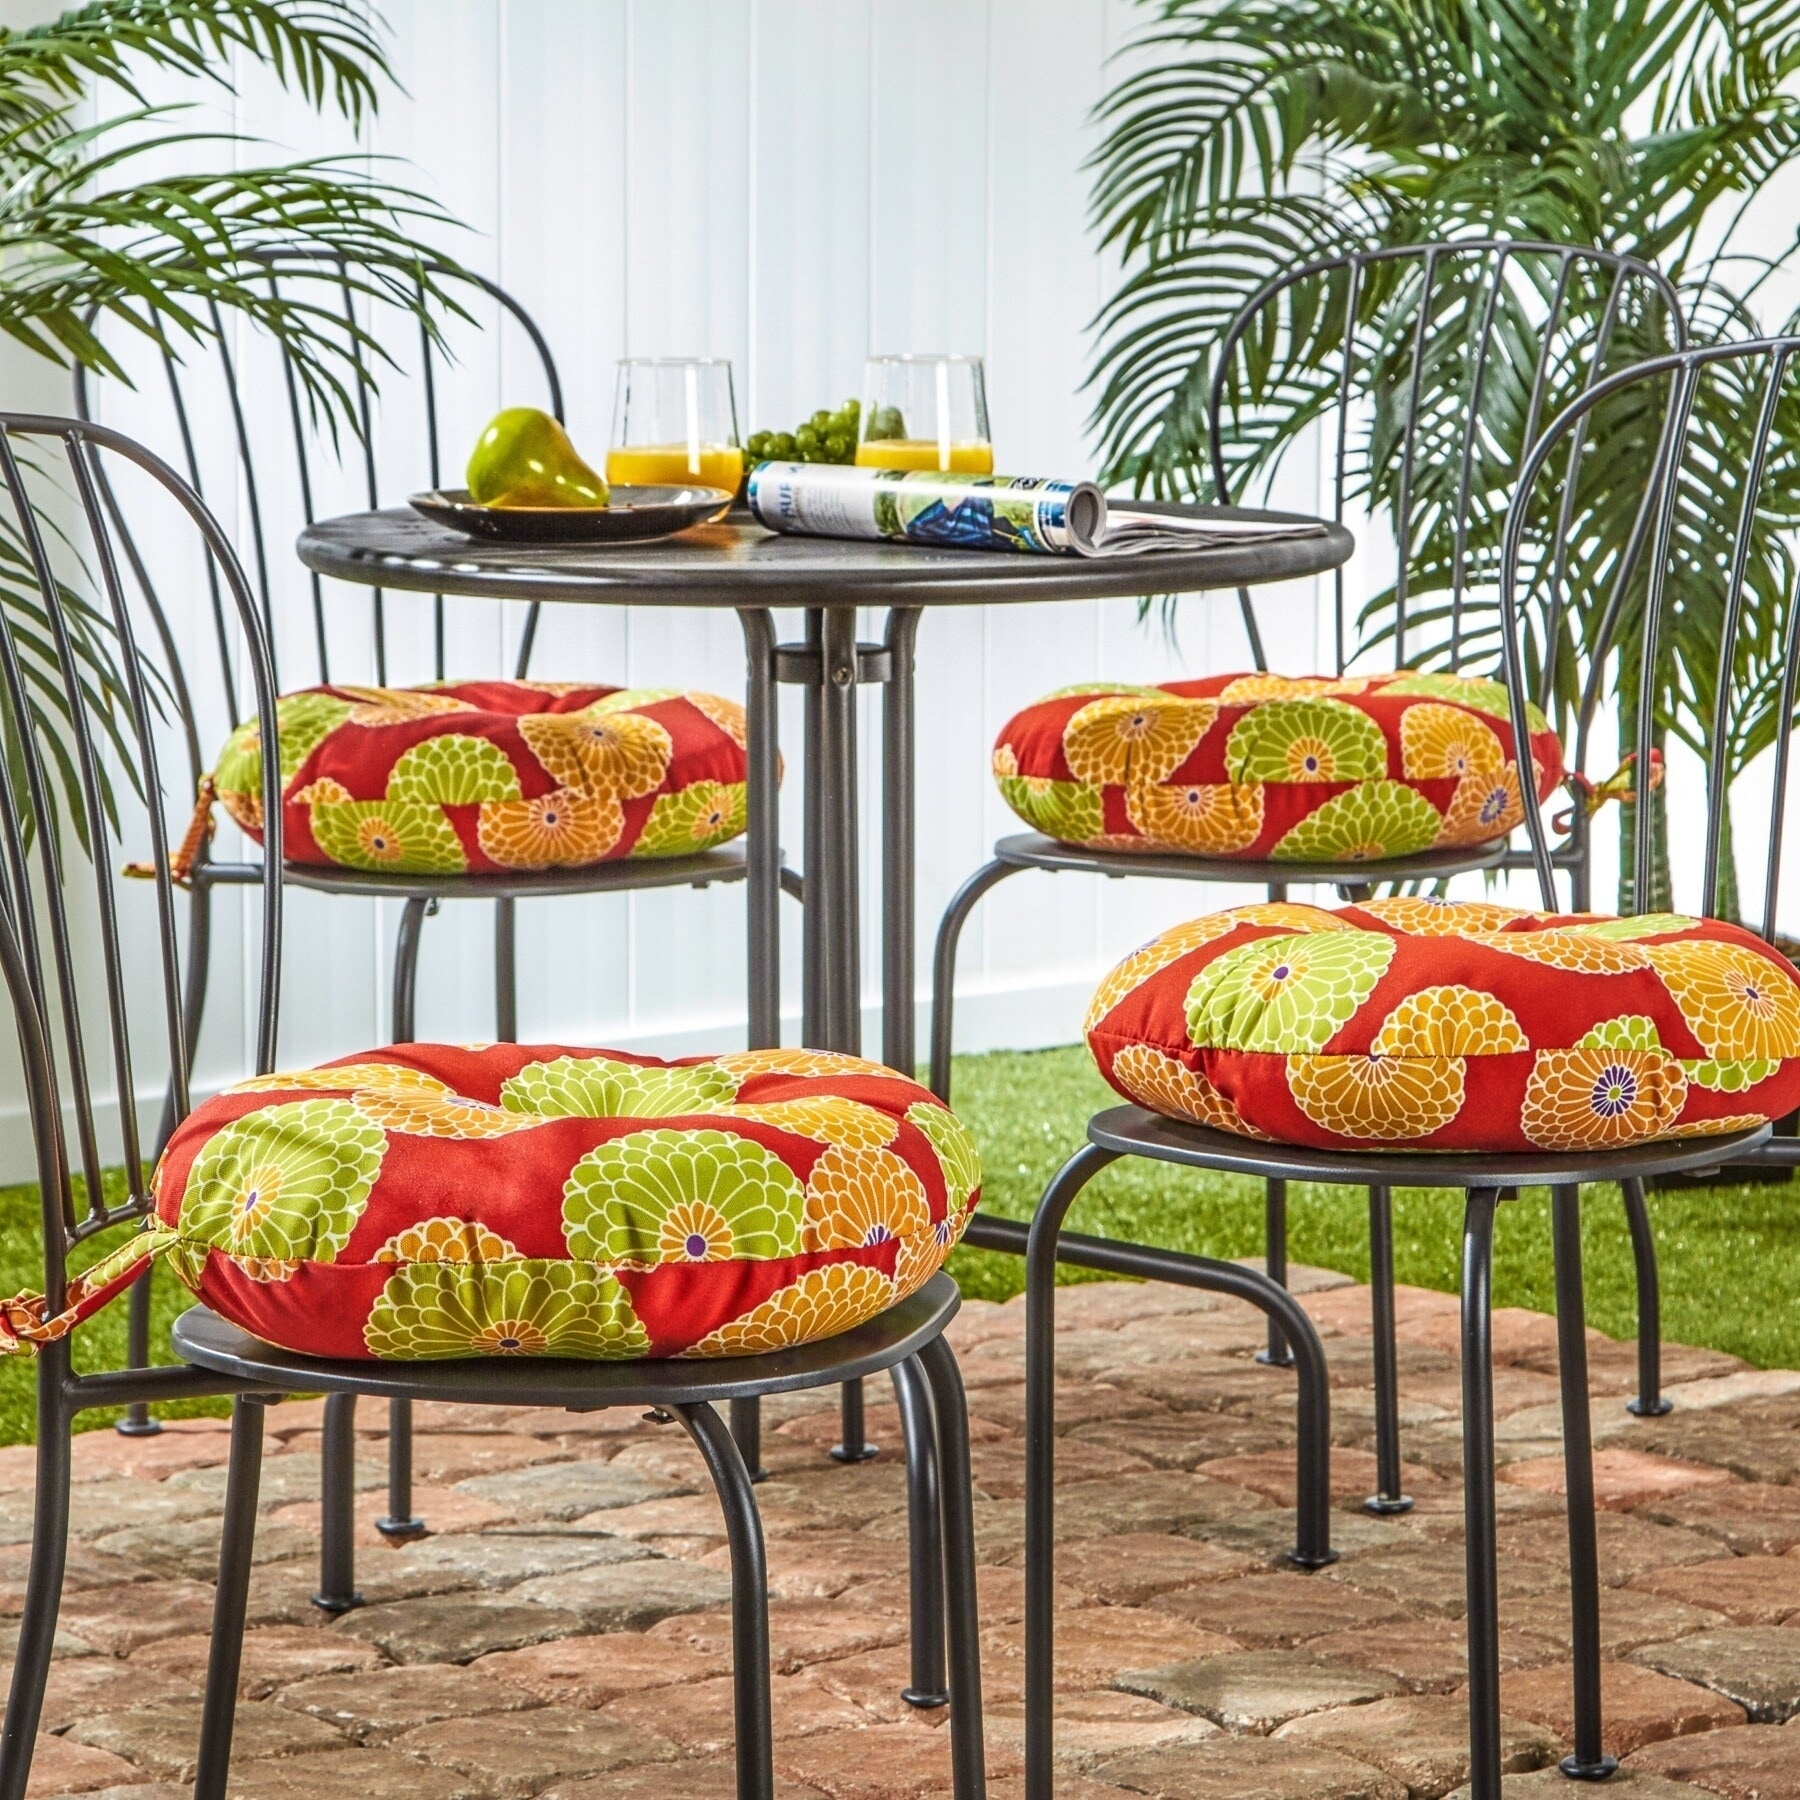 Eastport 15-inch Round Outdoor Bistro Chair Cushion (Set of 4) by